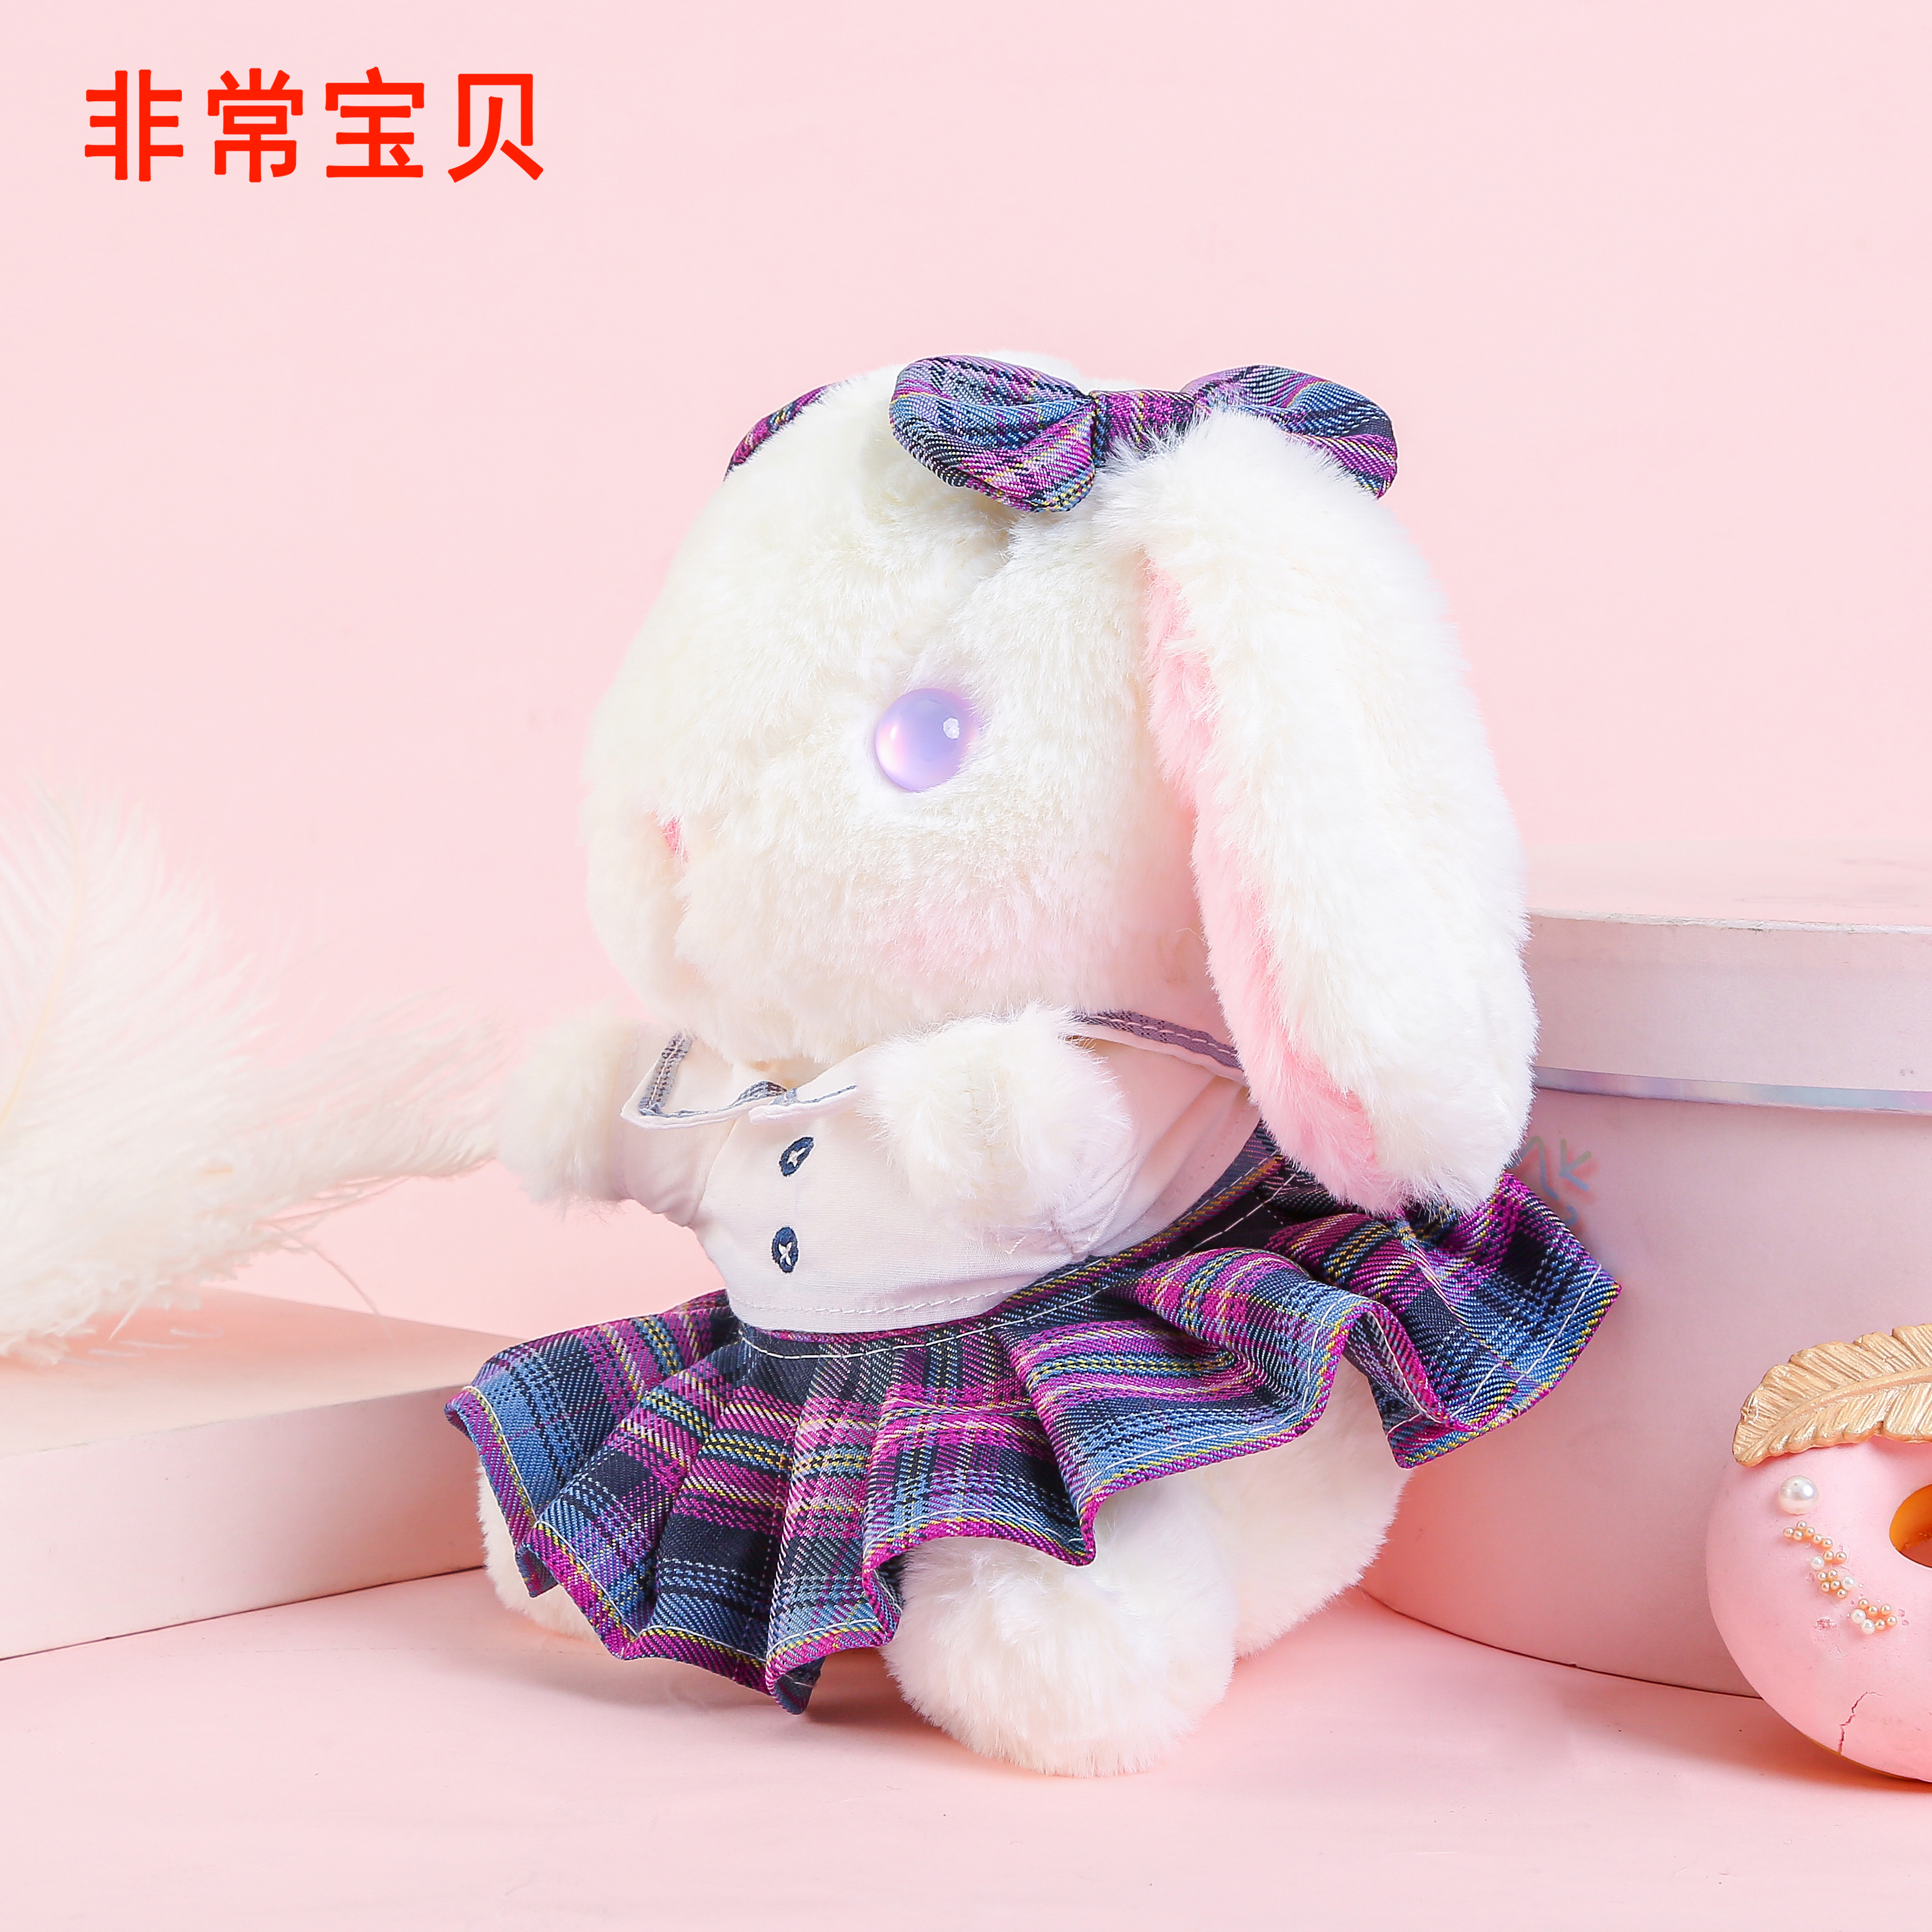 20cmjk紫色兔非常宝贝毛绒玩具布娃娃玩偶抱枕婚庆礼品生日礼物详情图2